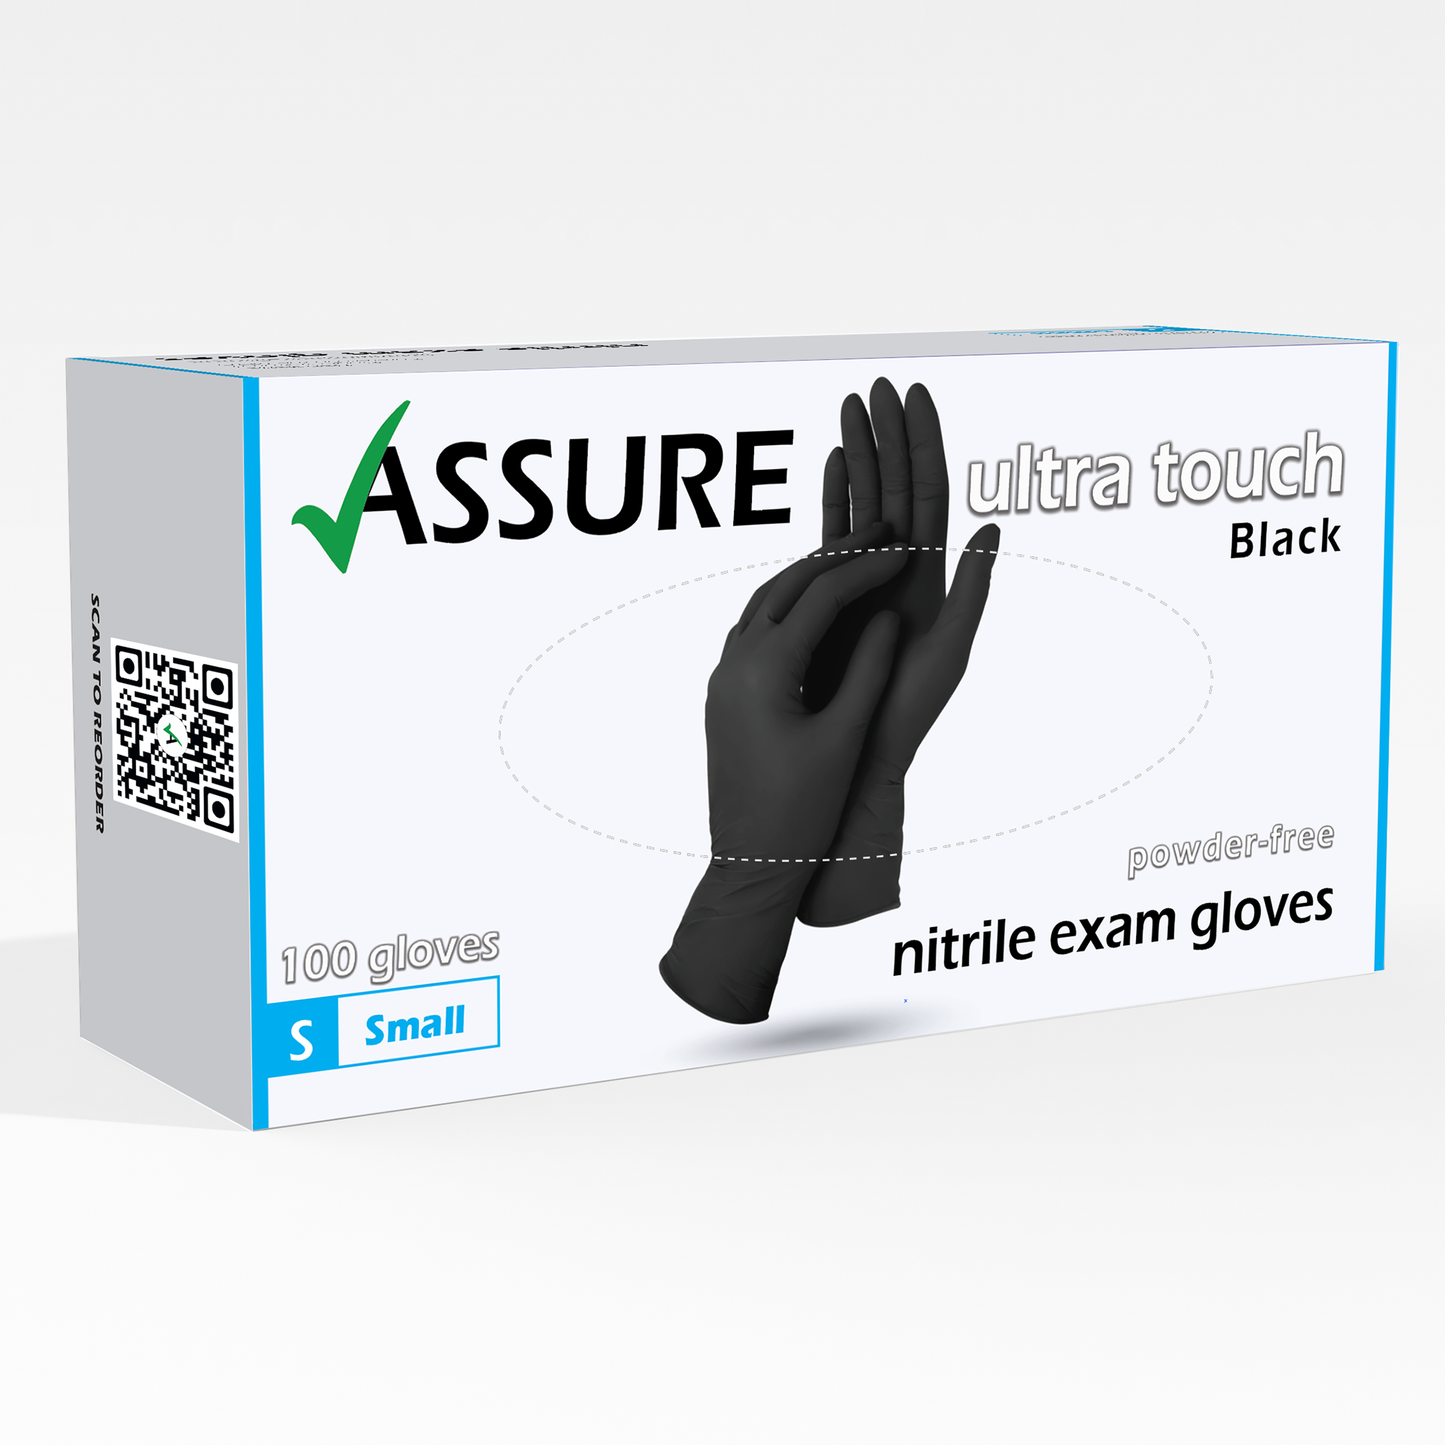 ASSURE Black Nitrile Gloves $5.50 per box of 100, 10 boxes per carton